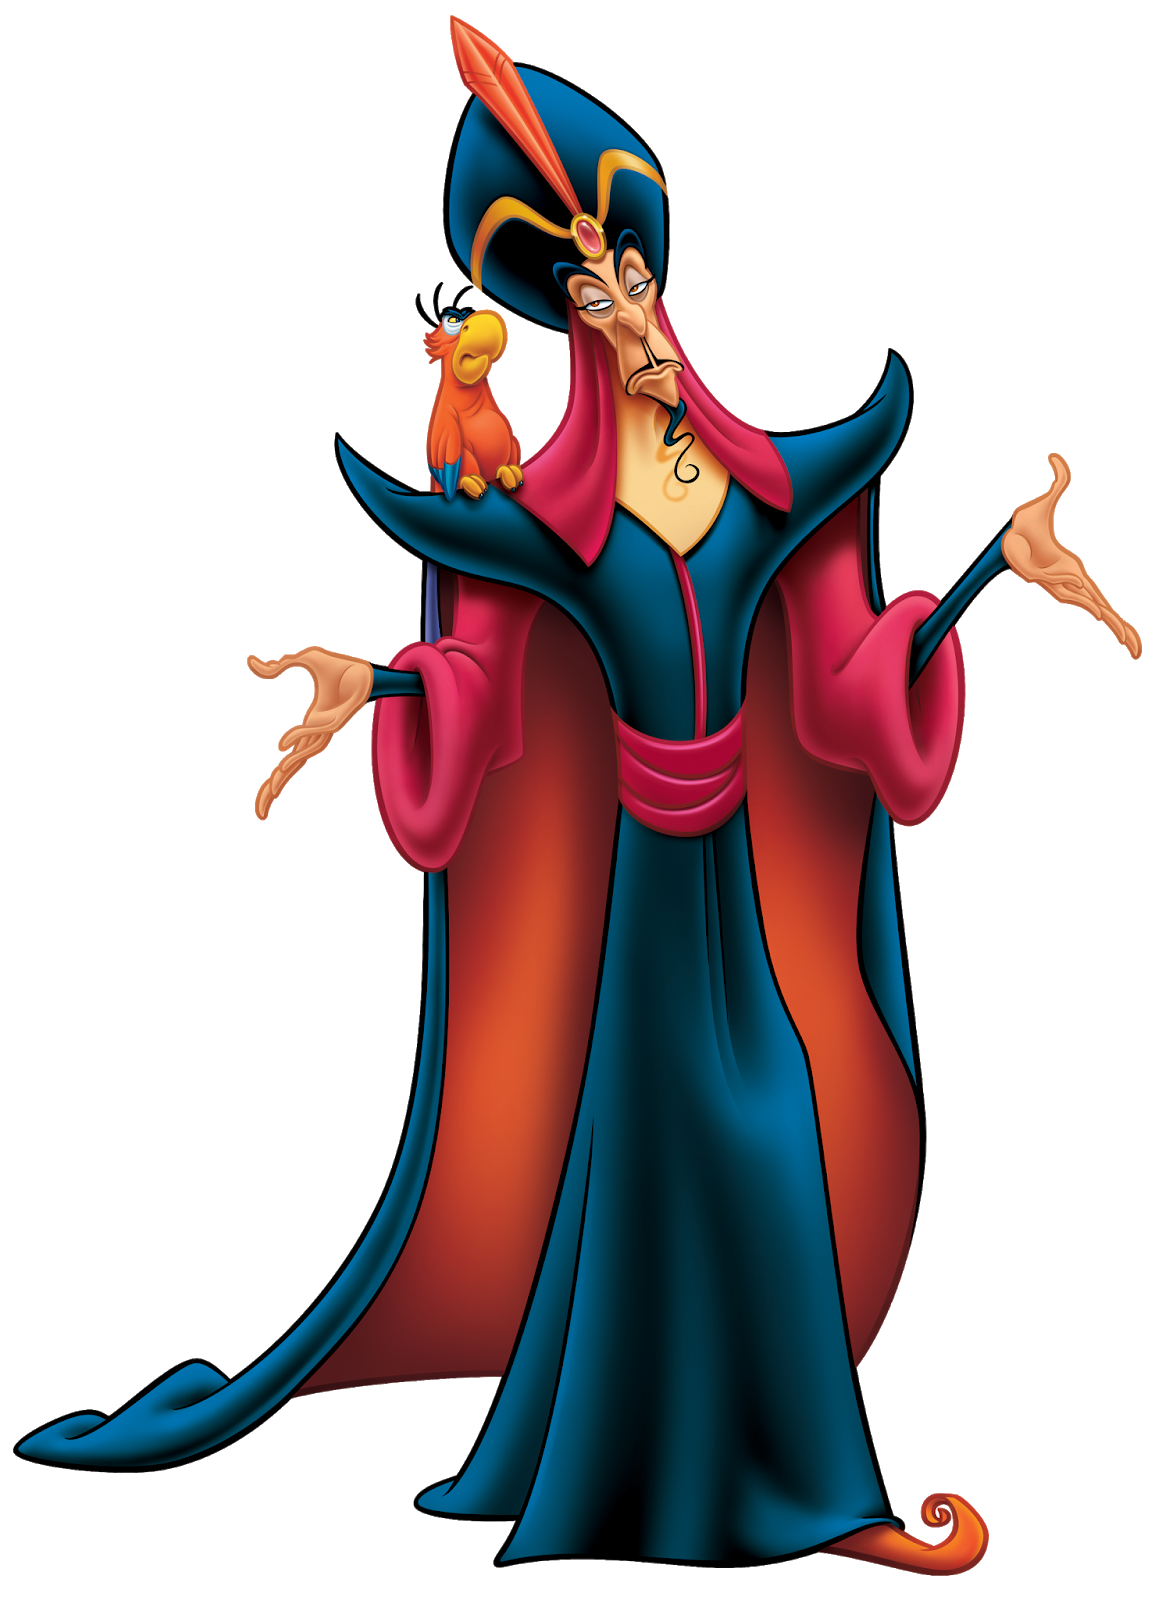 Aladdin (Disney character) - Wikipedia